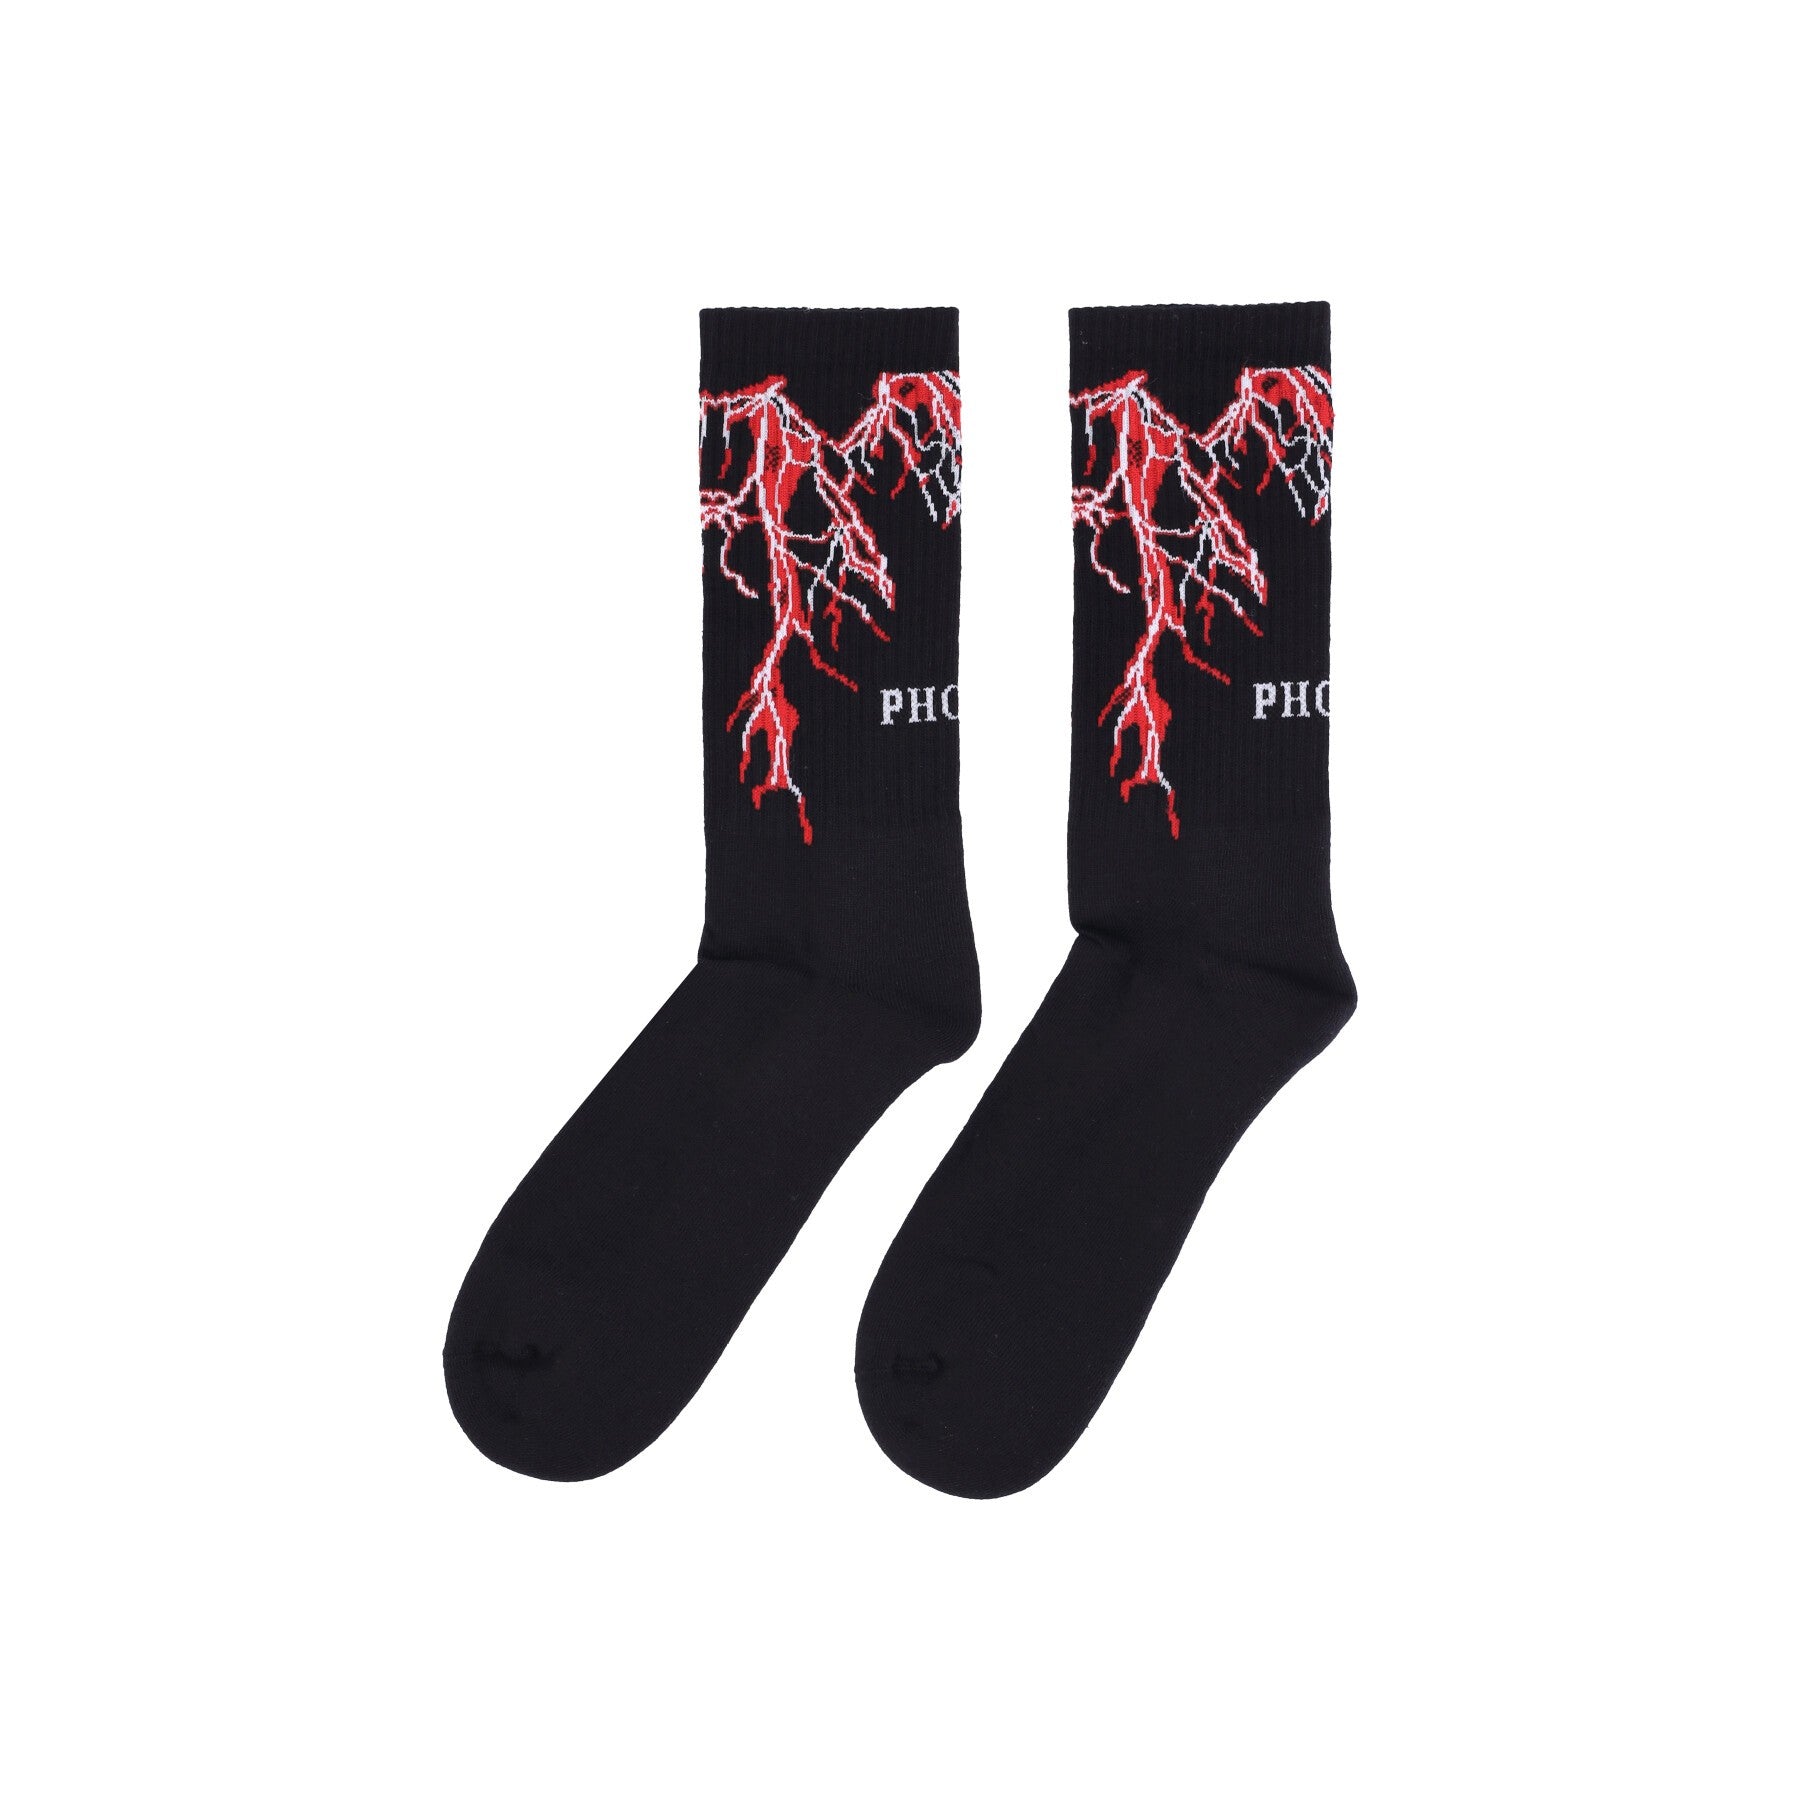 Phobia, Calza Media Uomo Lightning Socks, Black/red